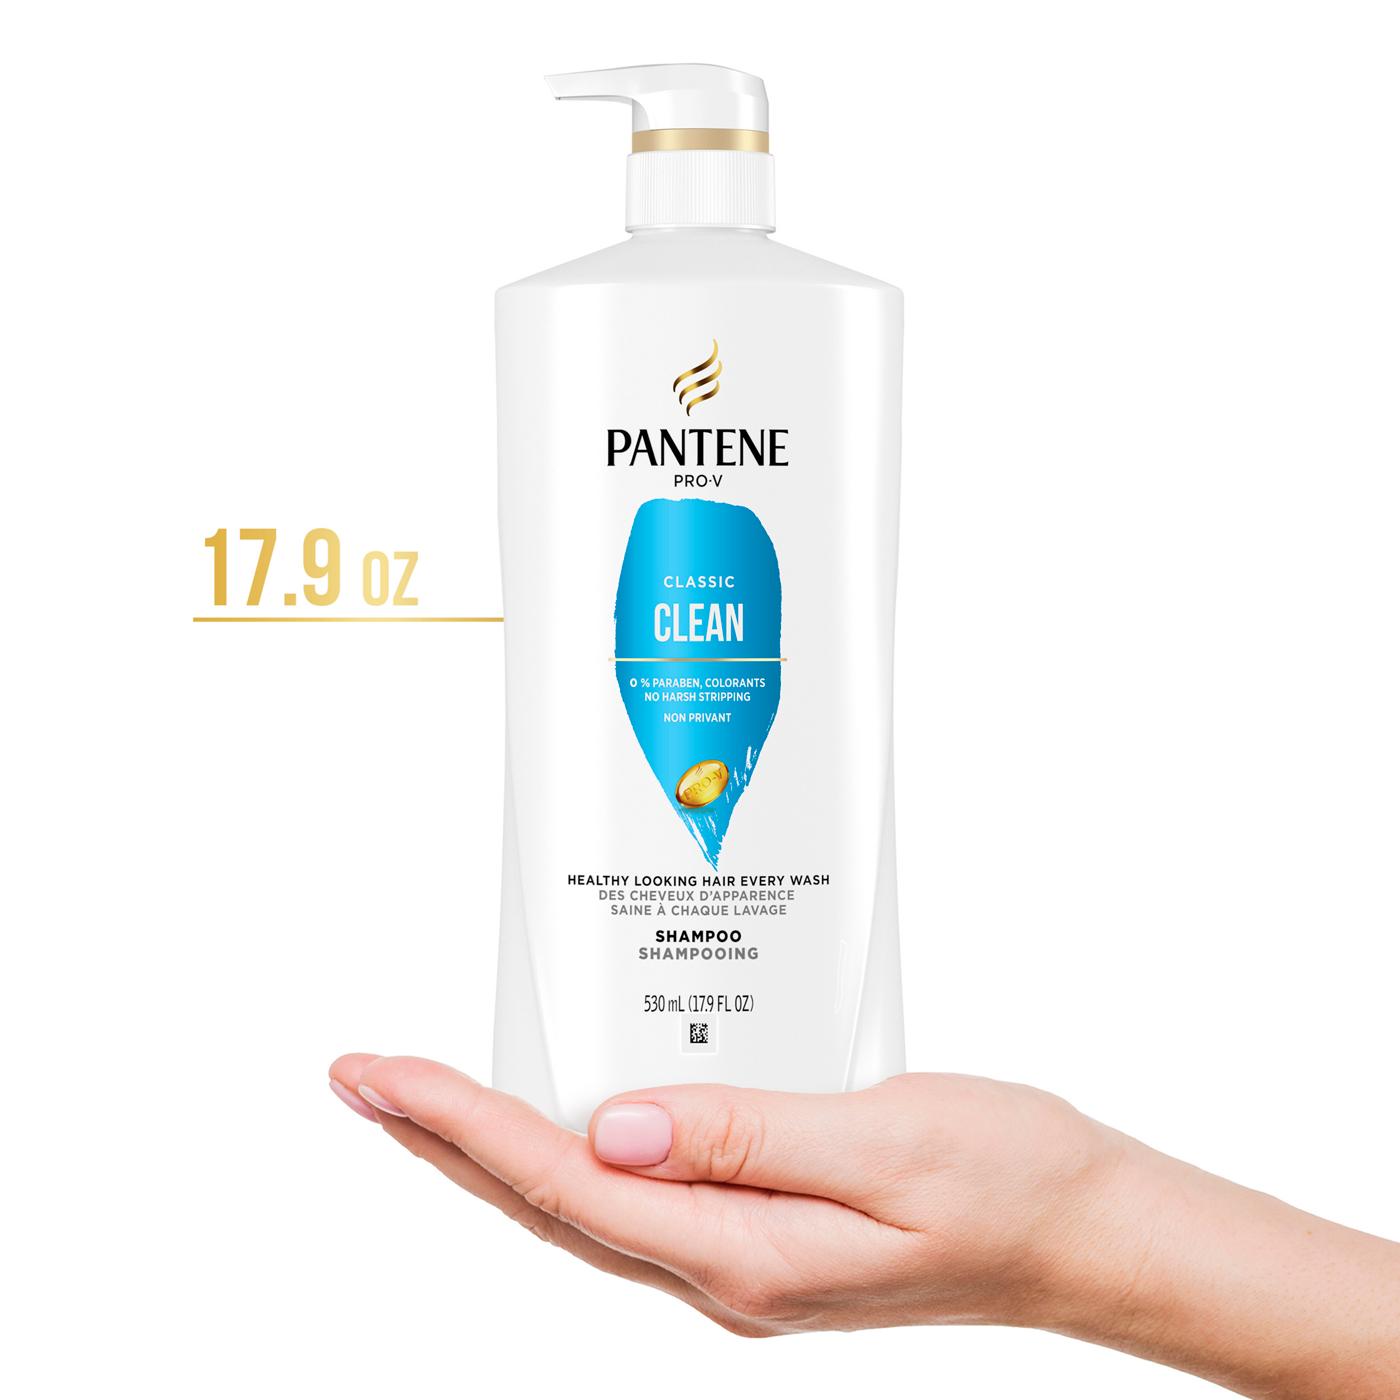 Pantene Pro-V Classic Clean Shampoo; image 6 of 10